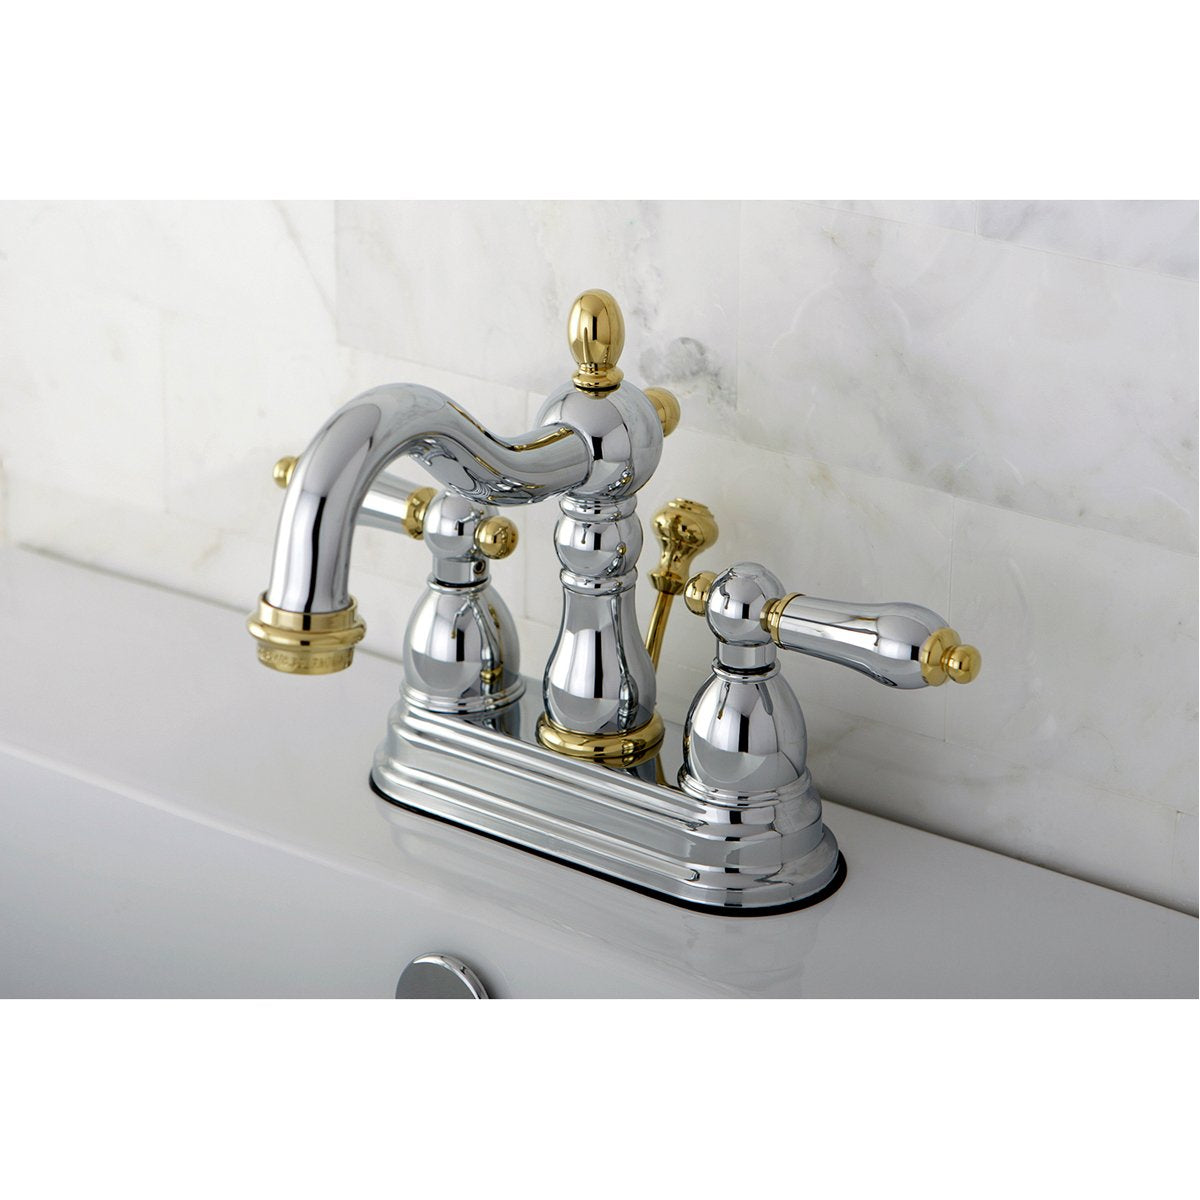 Kingston Brass Heritage 4-Inch Centerset 3-Hole Bathroom Faucet